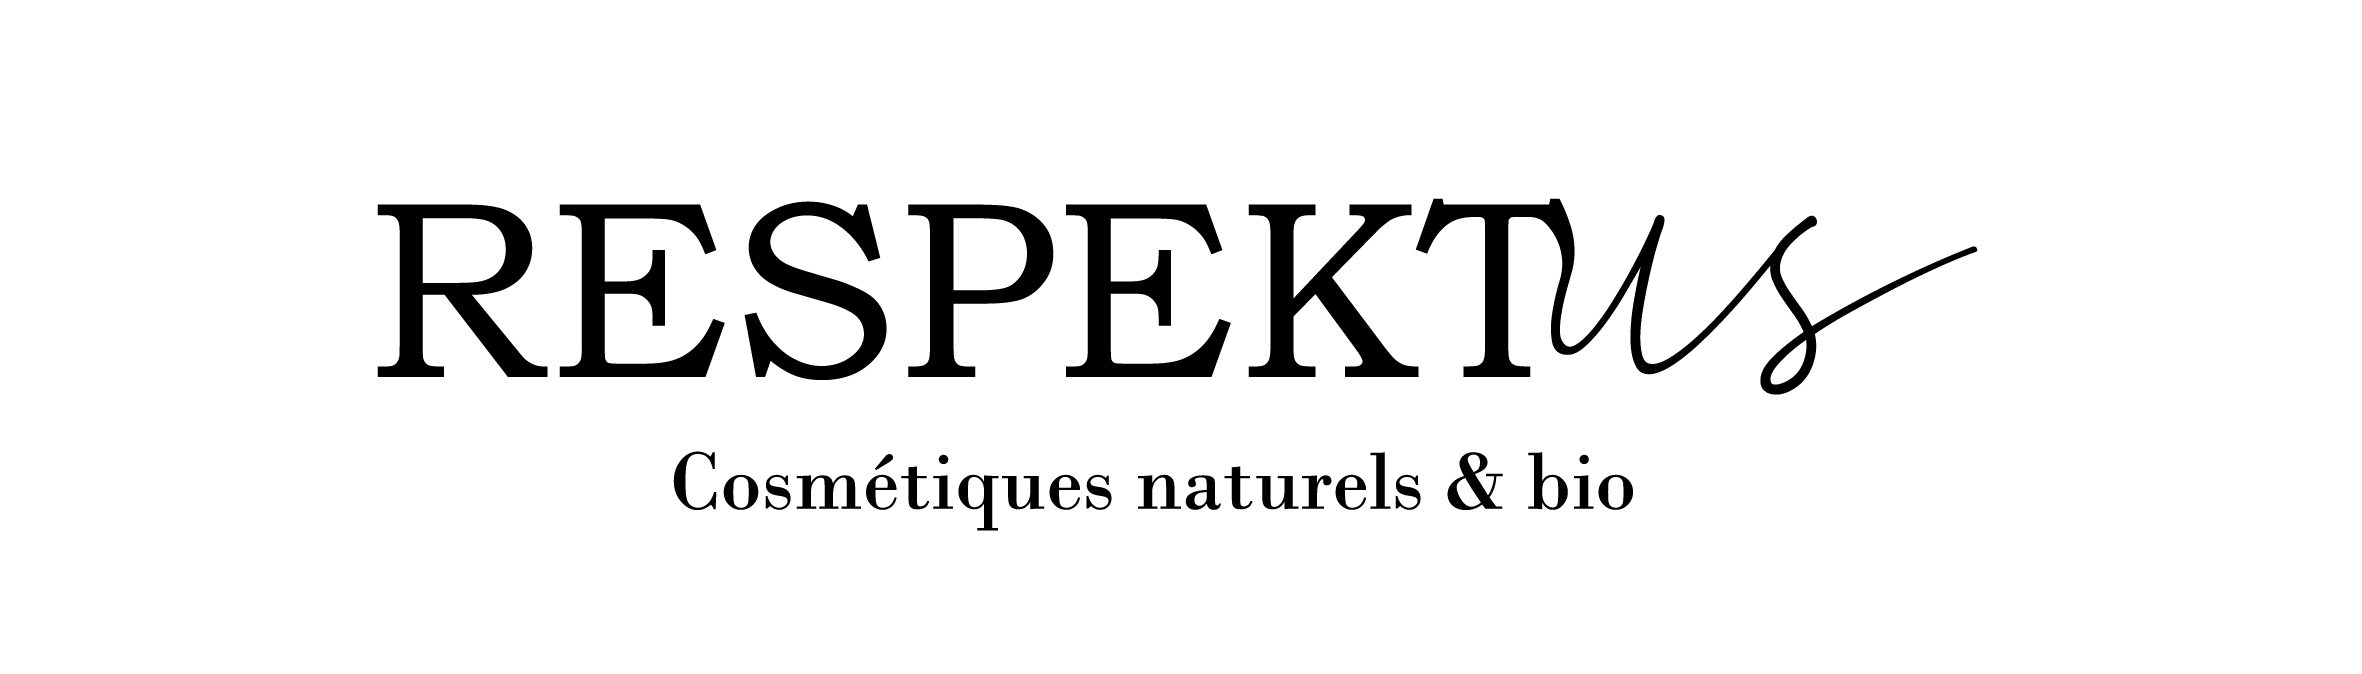 Logo RESPEKTUS